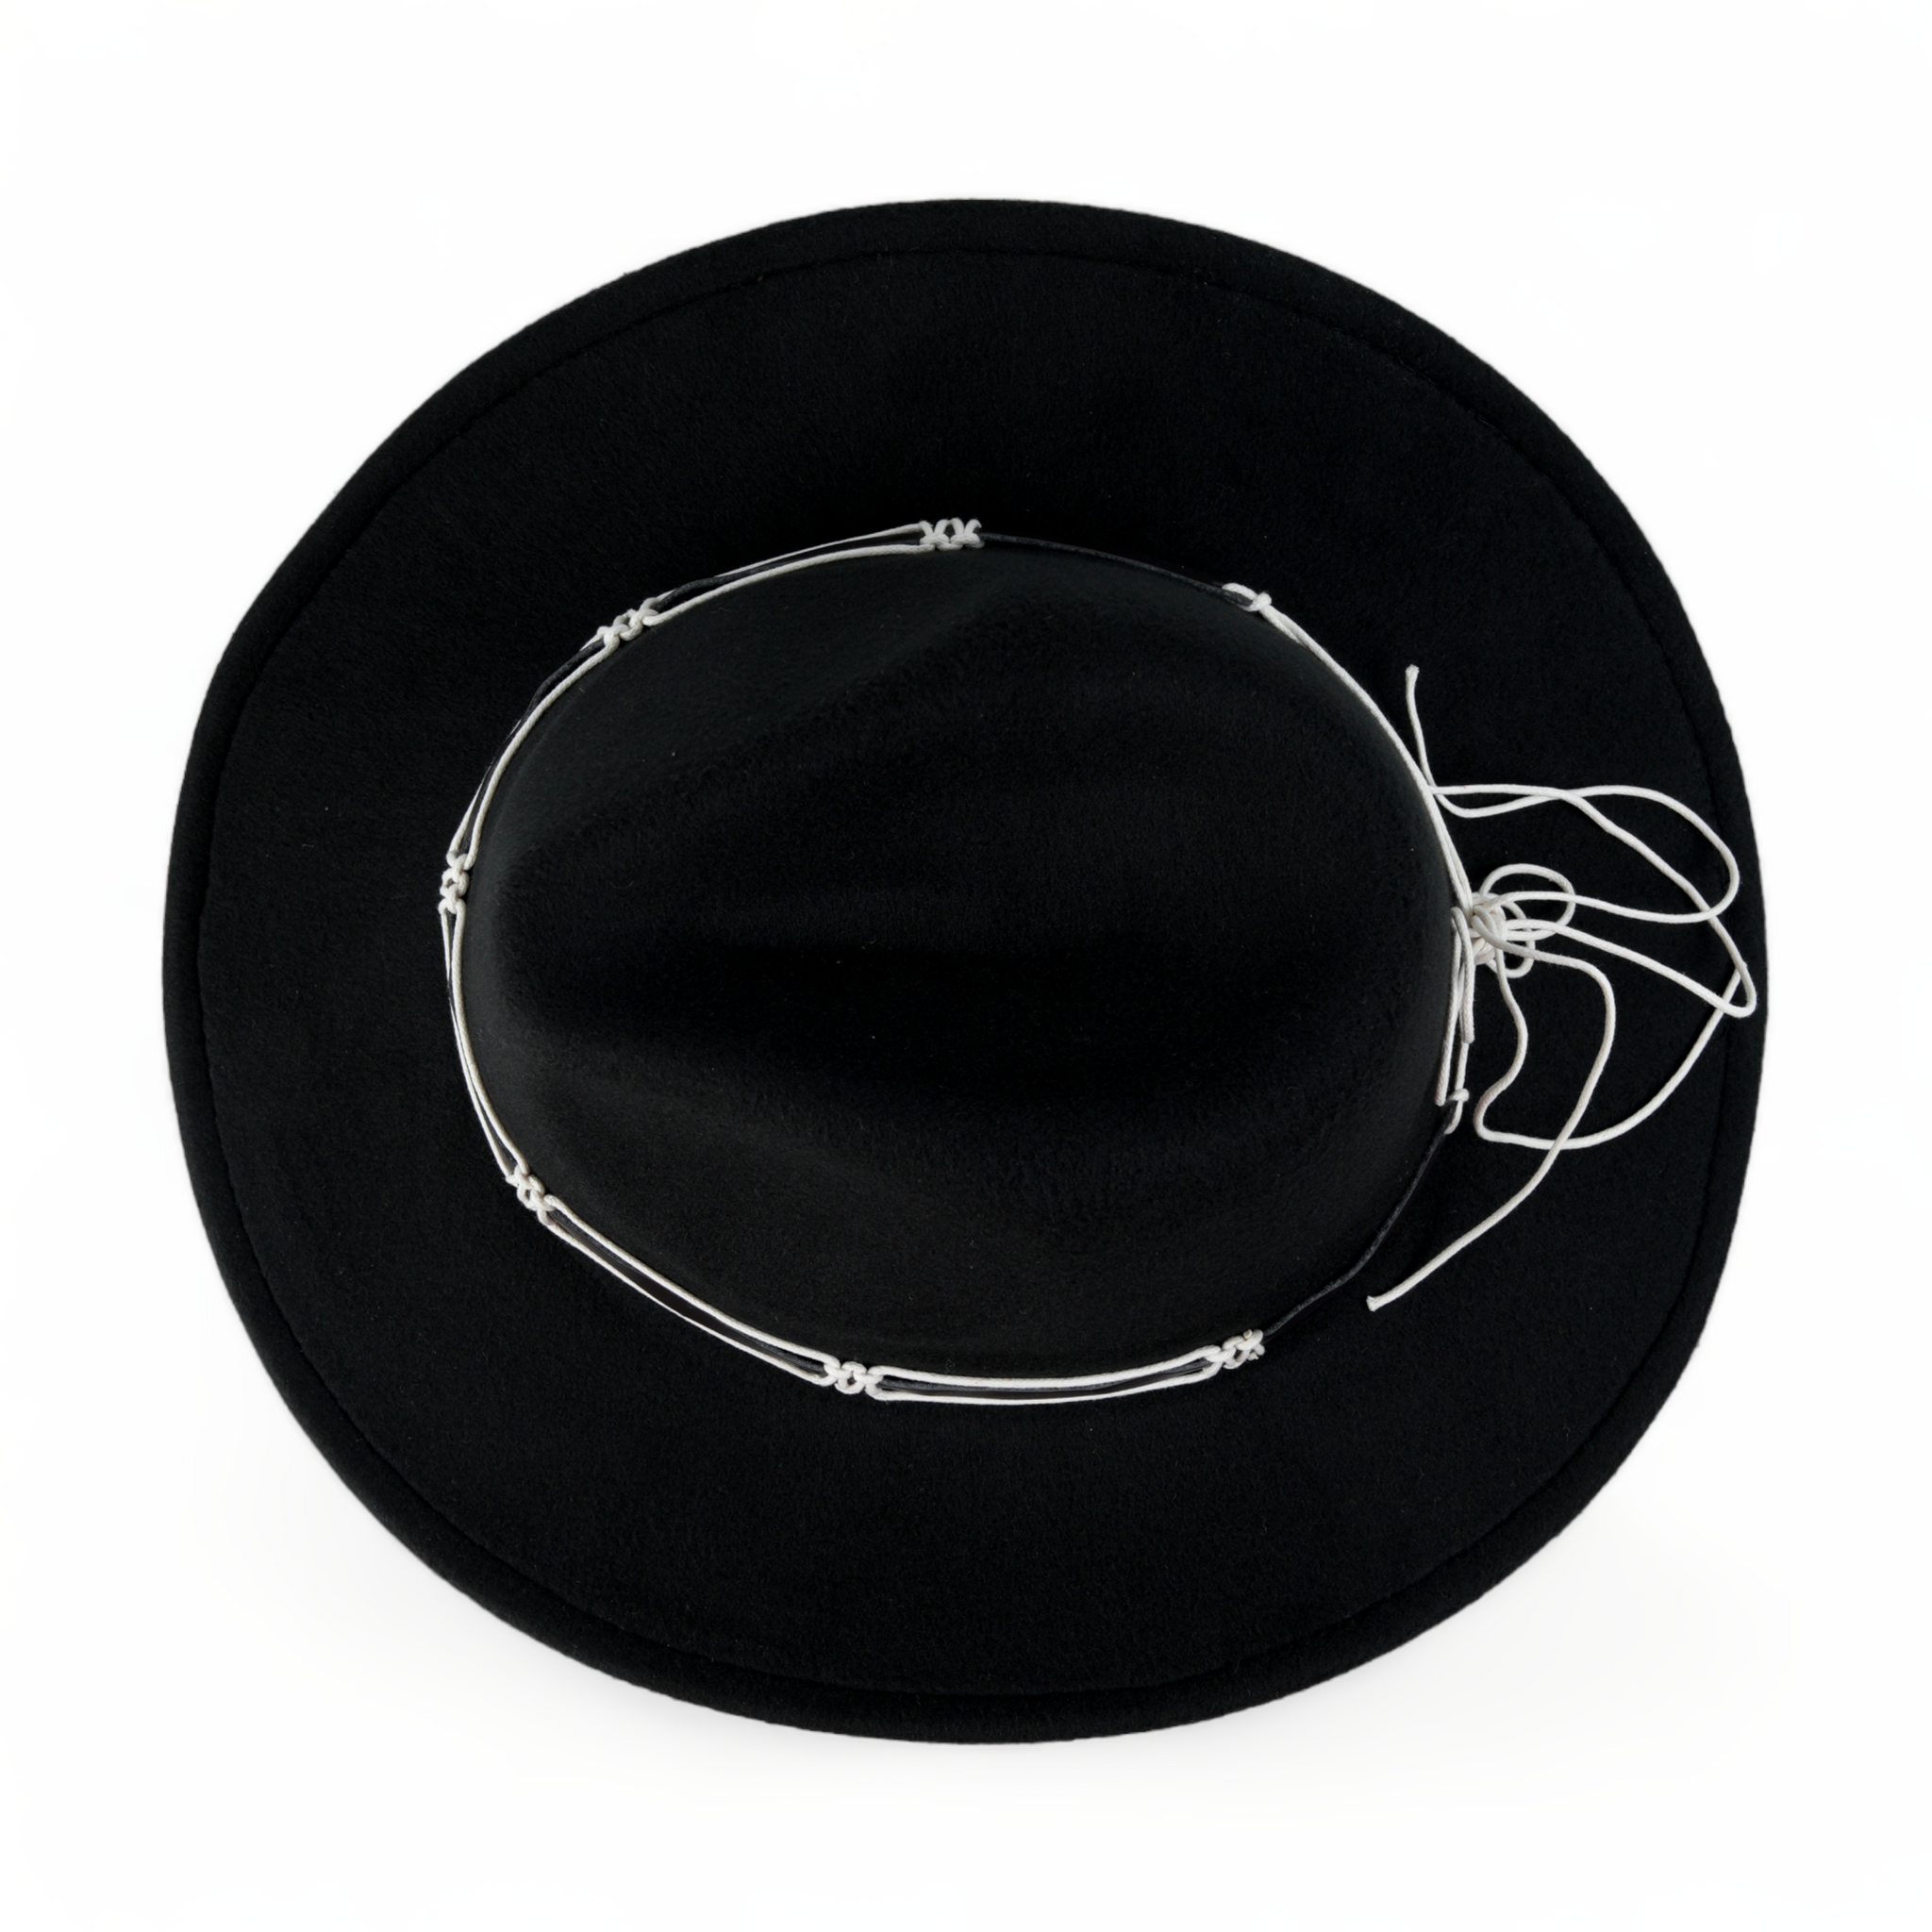 Chokore Cowboy Hat with Black and White Belt (Black)